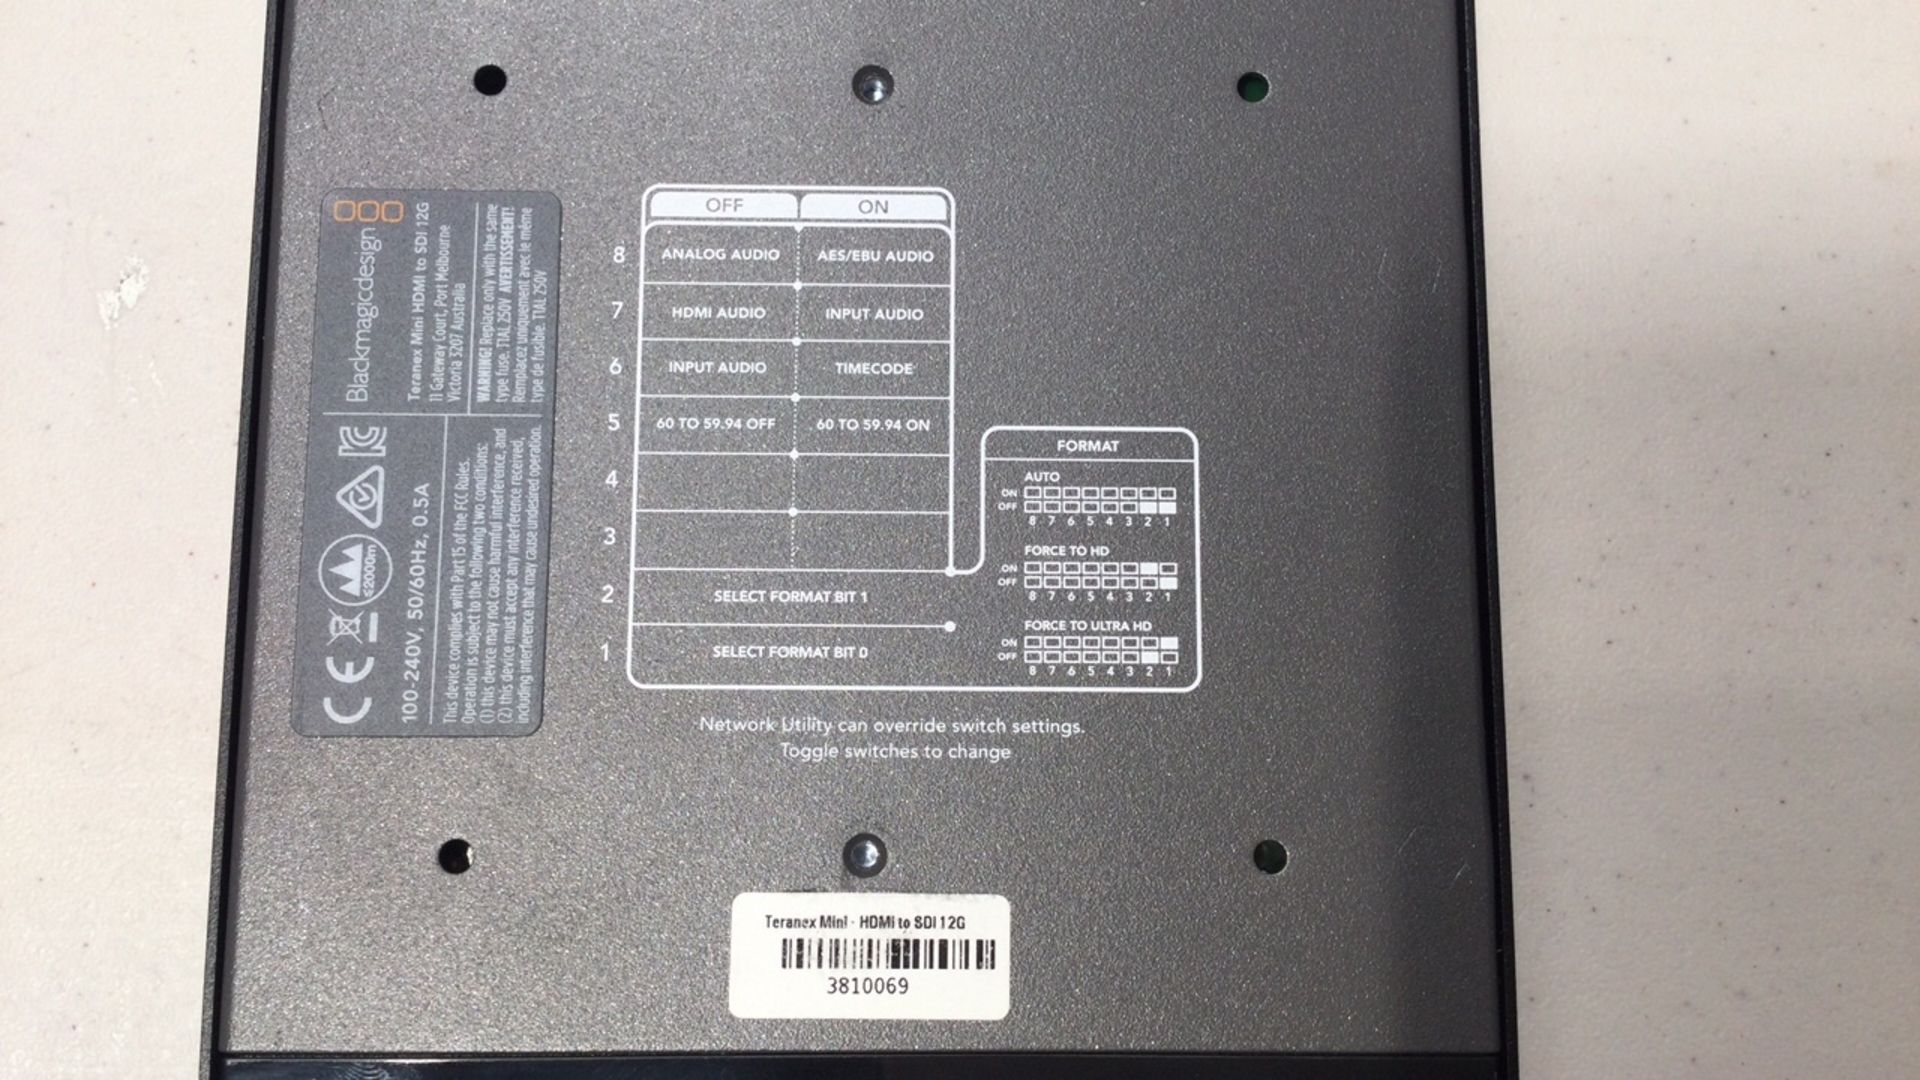 Blackmagicdesign Teranex Mini HDMI to SDI 12G - including Smart Panel - Image 3 of 3